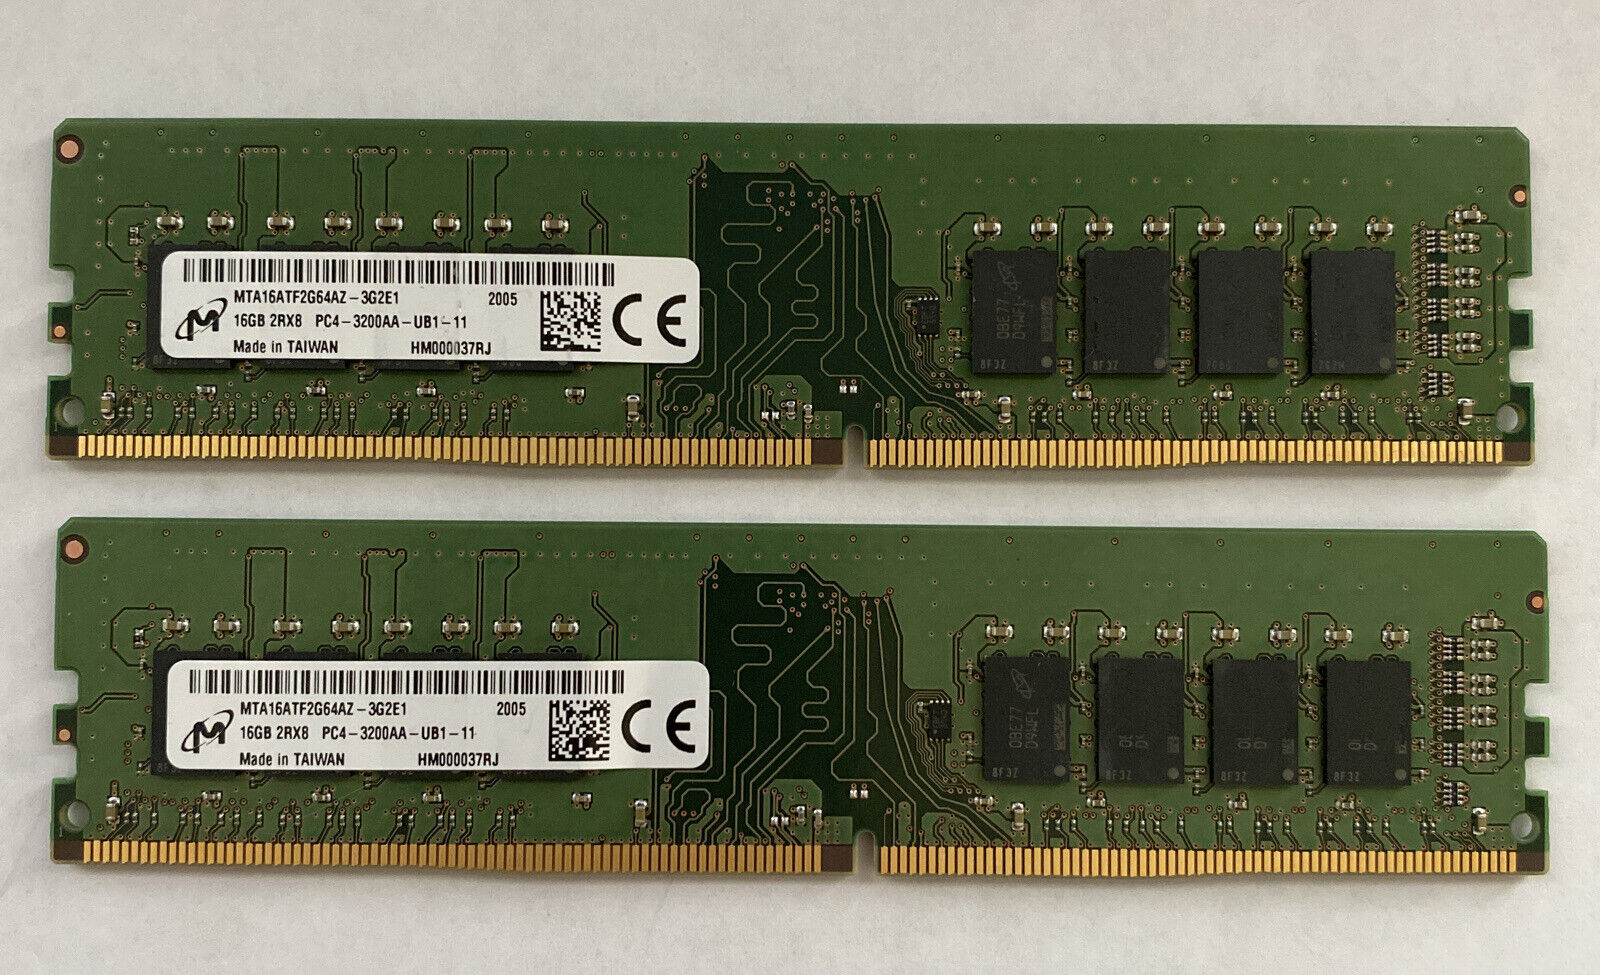 32GB Micron Desktop Memory Kit (2x16GB) MTA16ATF2G64AZ 2RX8 PC4 3200AA-UB1-11